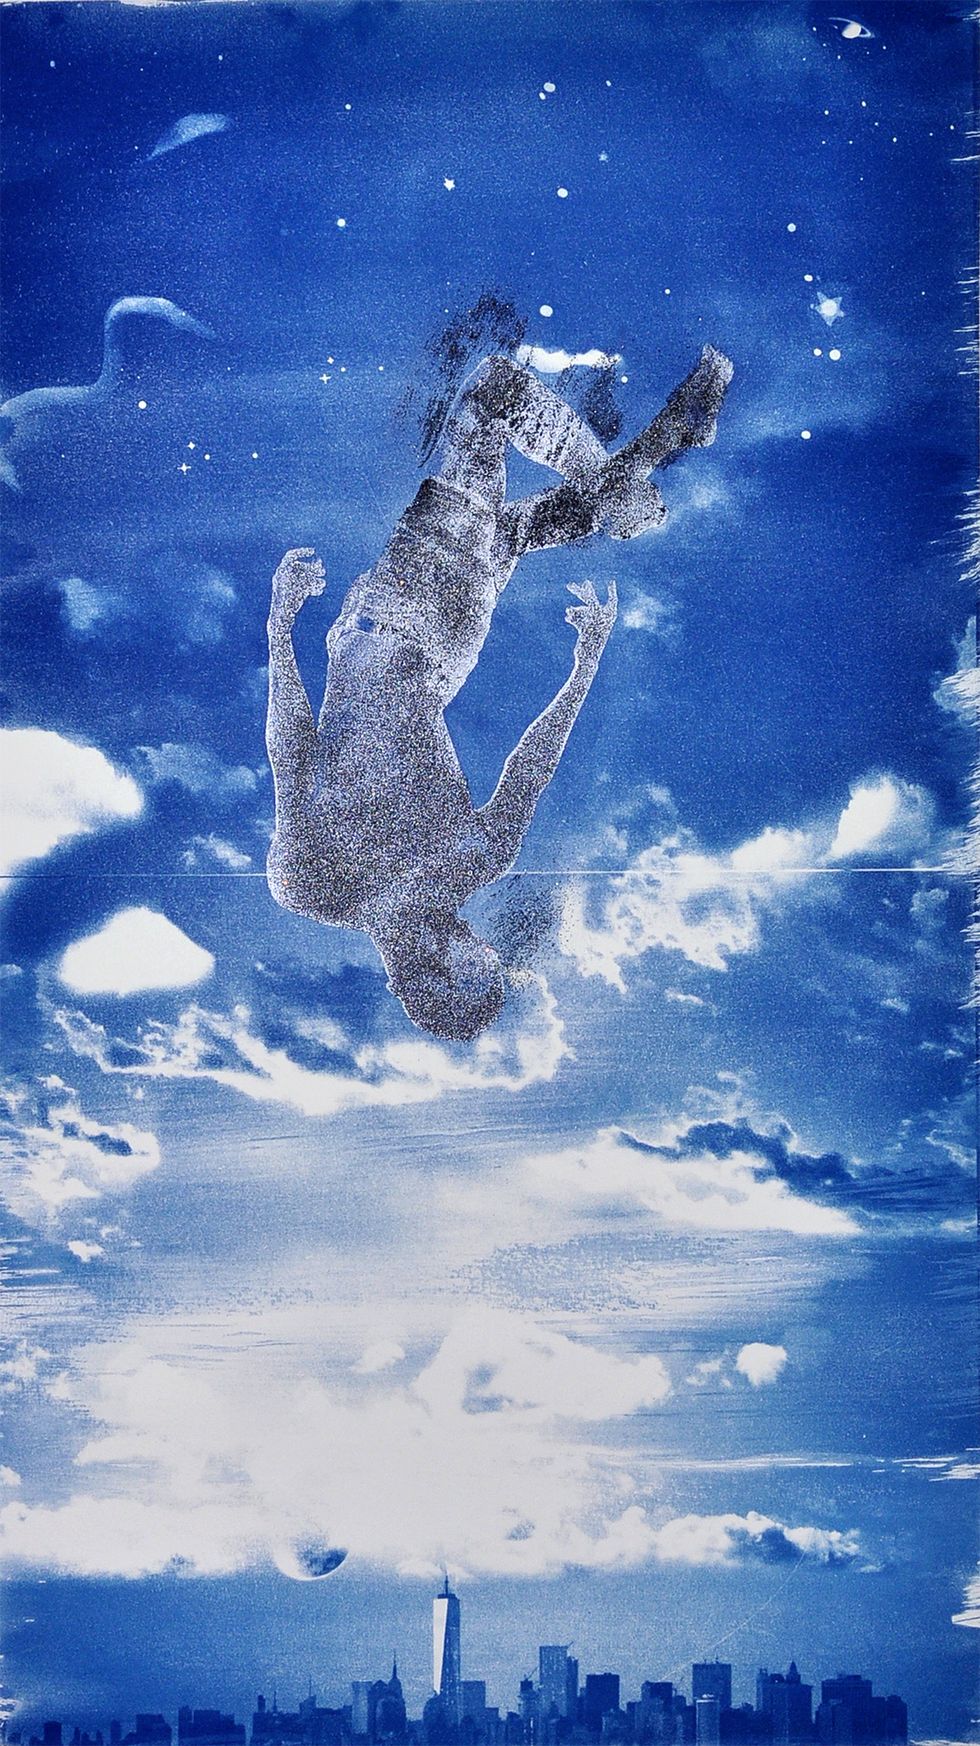 Blue, Water, Sky, Flip (acrobatic), Cloud, Fun, Hand, Tree, Photography, Reflection, 